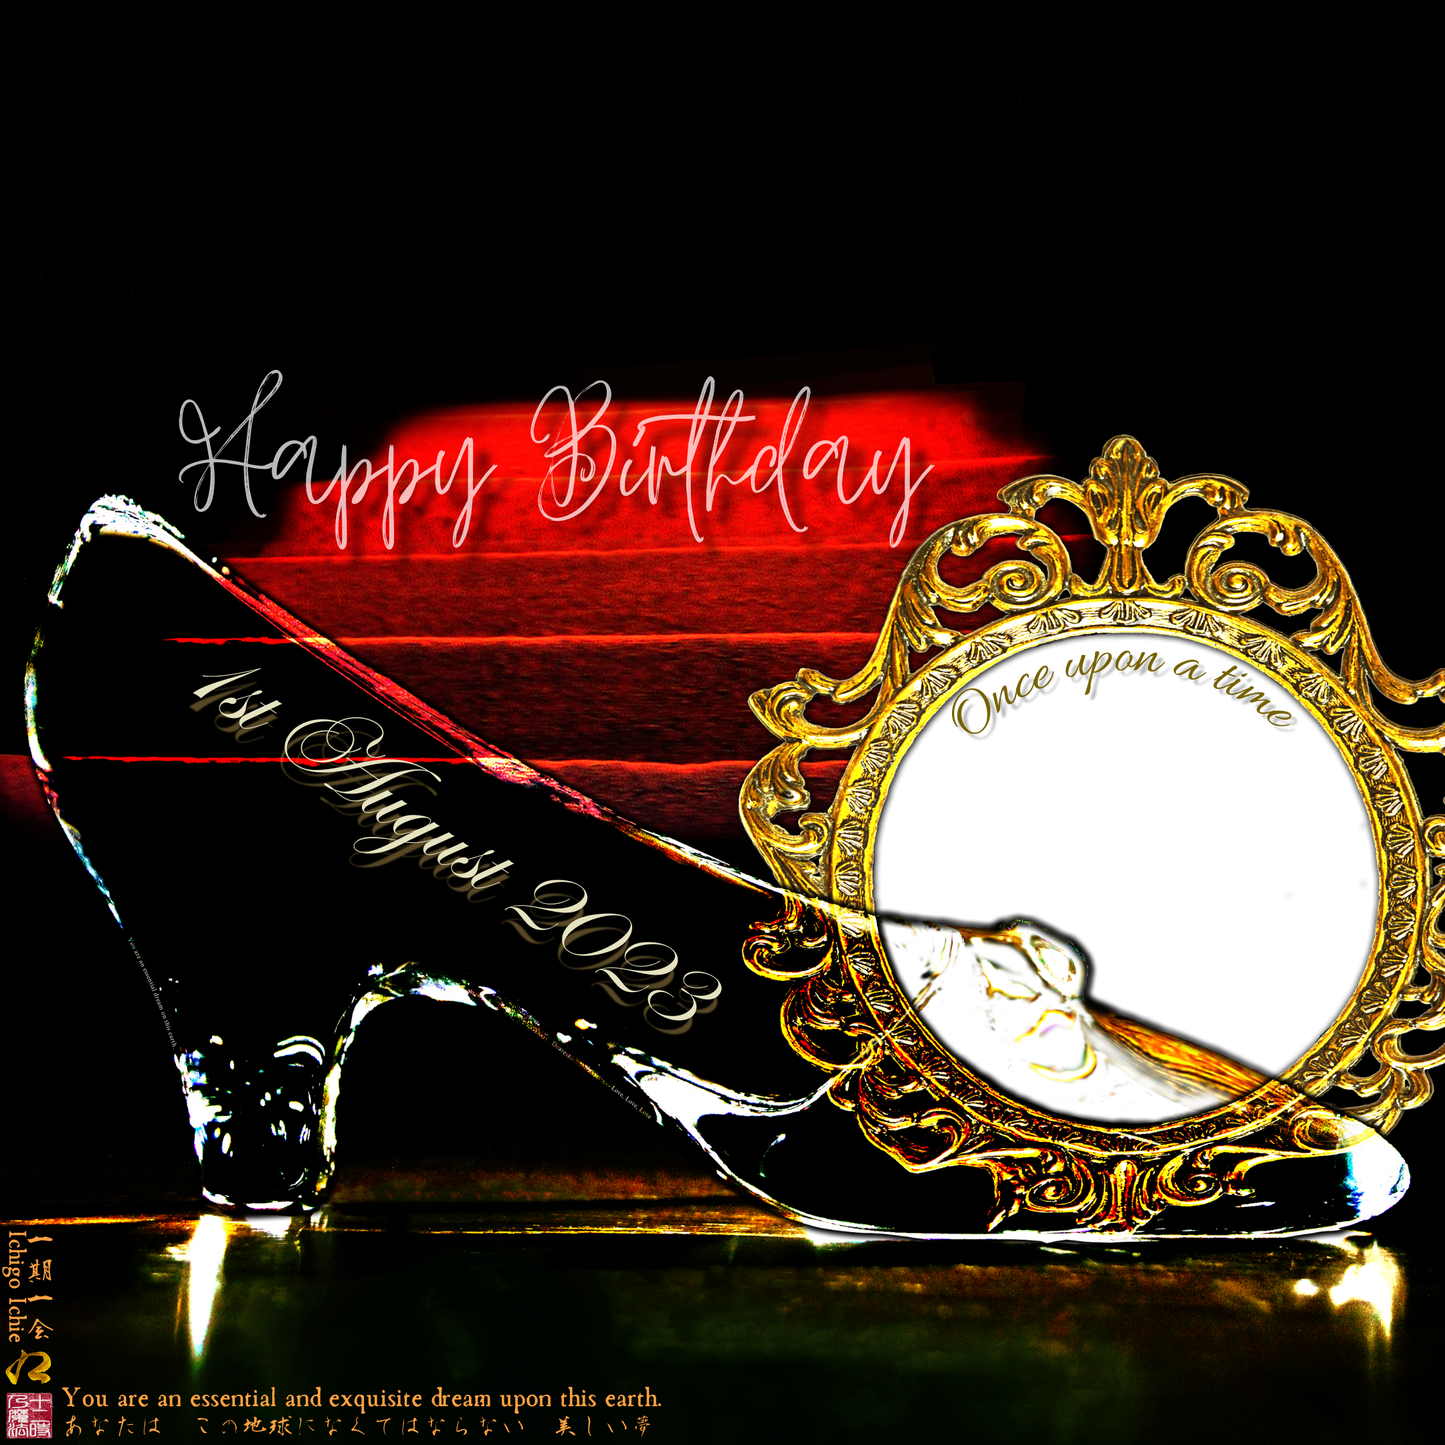 Happy Birthday Glass Slipper "Ichigo Ichie" 1st August 2023 the Right (1-of-1) NFT Art